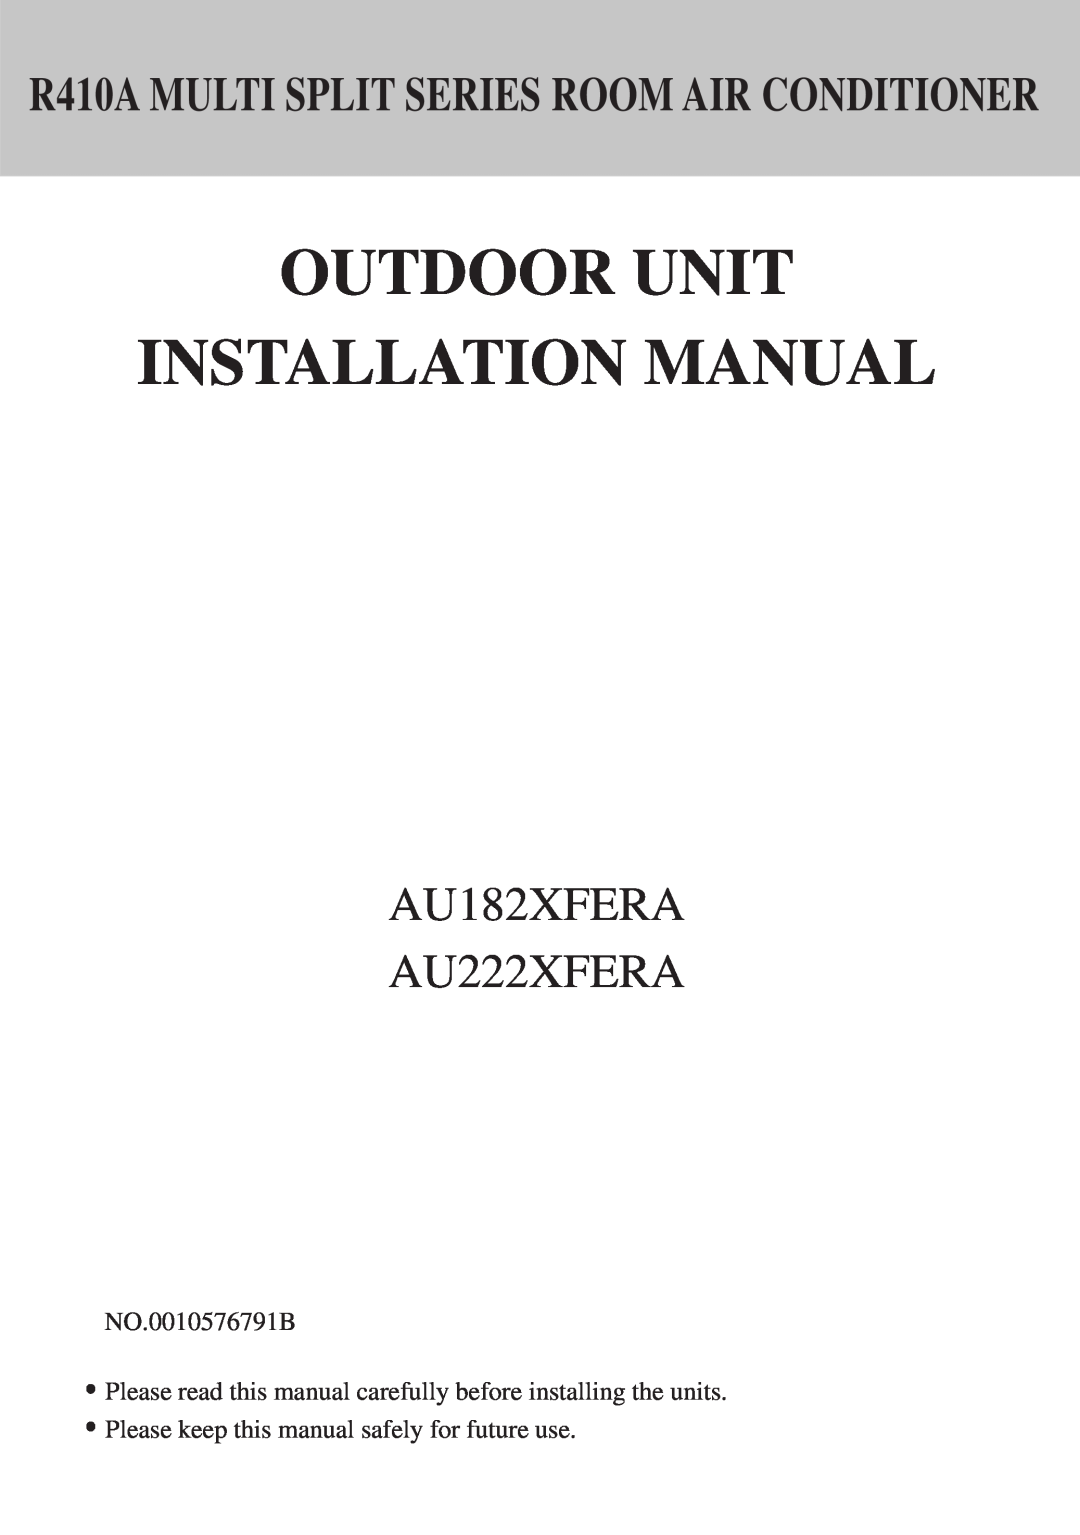 Haier installation manual NO.0010576791B, Outdoor Unit Installation Manual, AU182XFERA AU222XFERA 